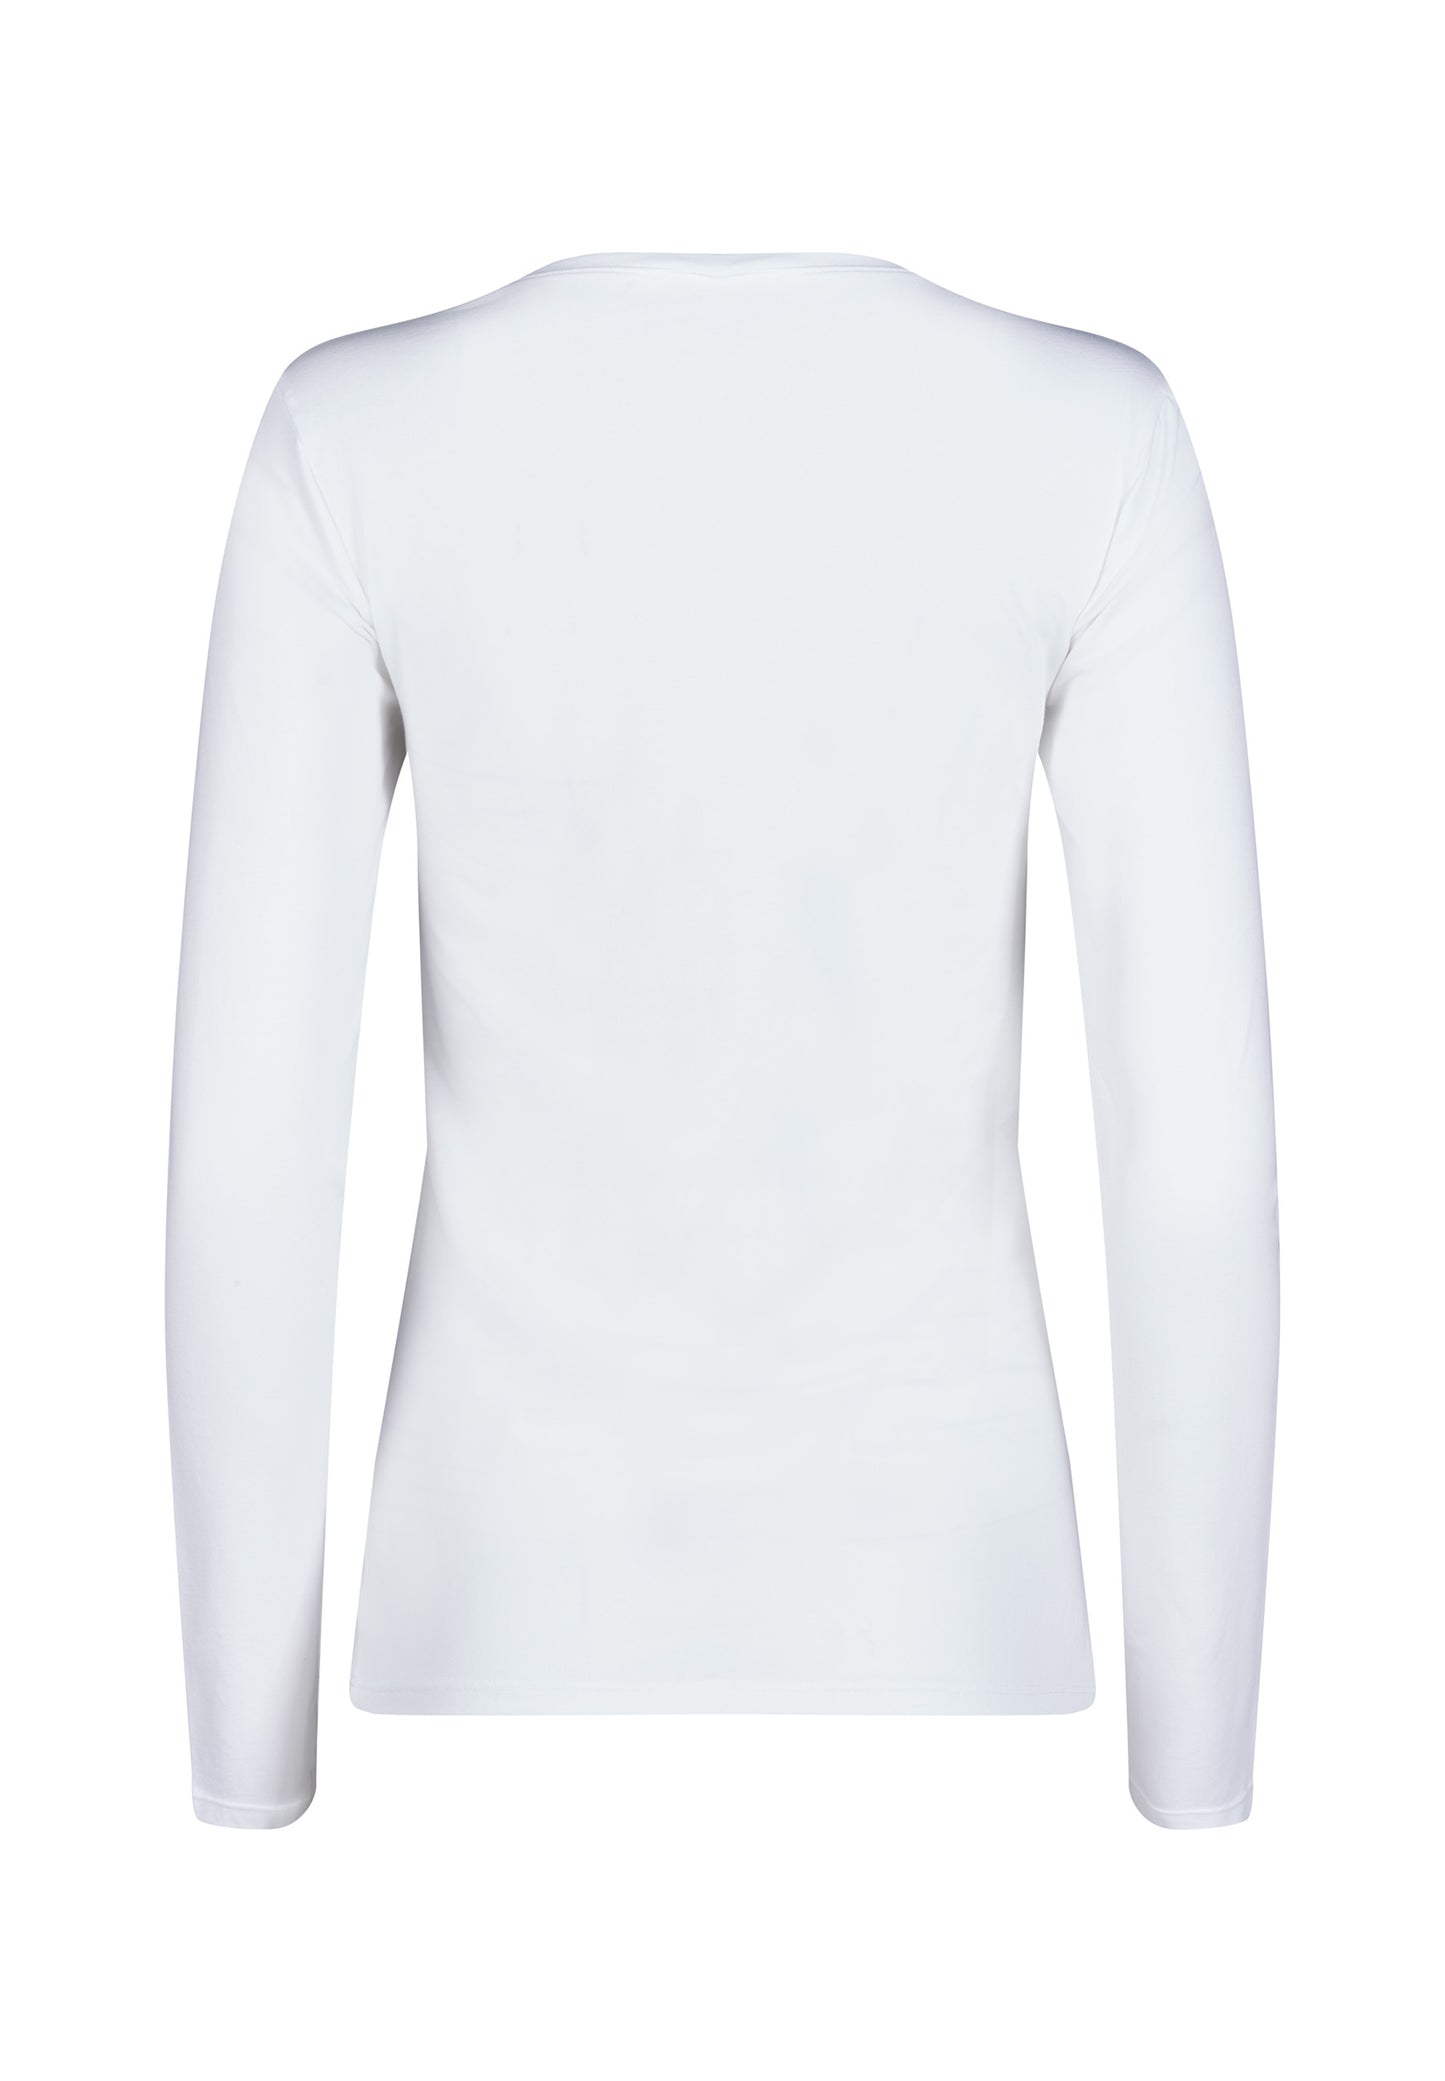 Skiny Damen Shirt langarm Cotton Essentials (White)